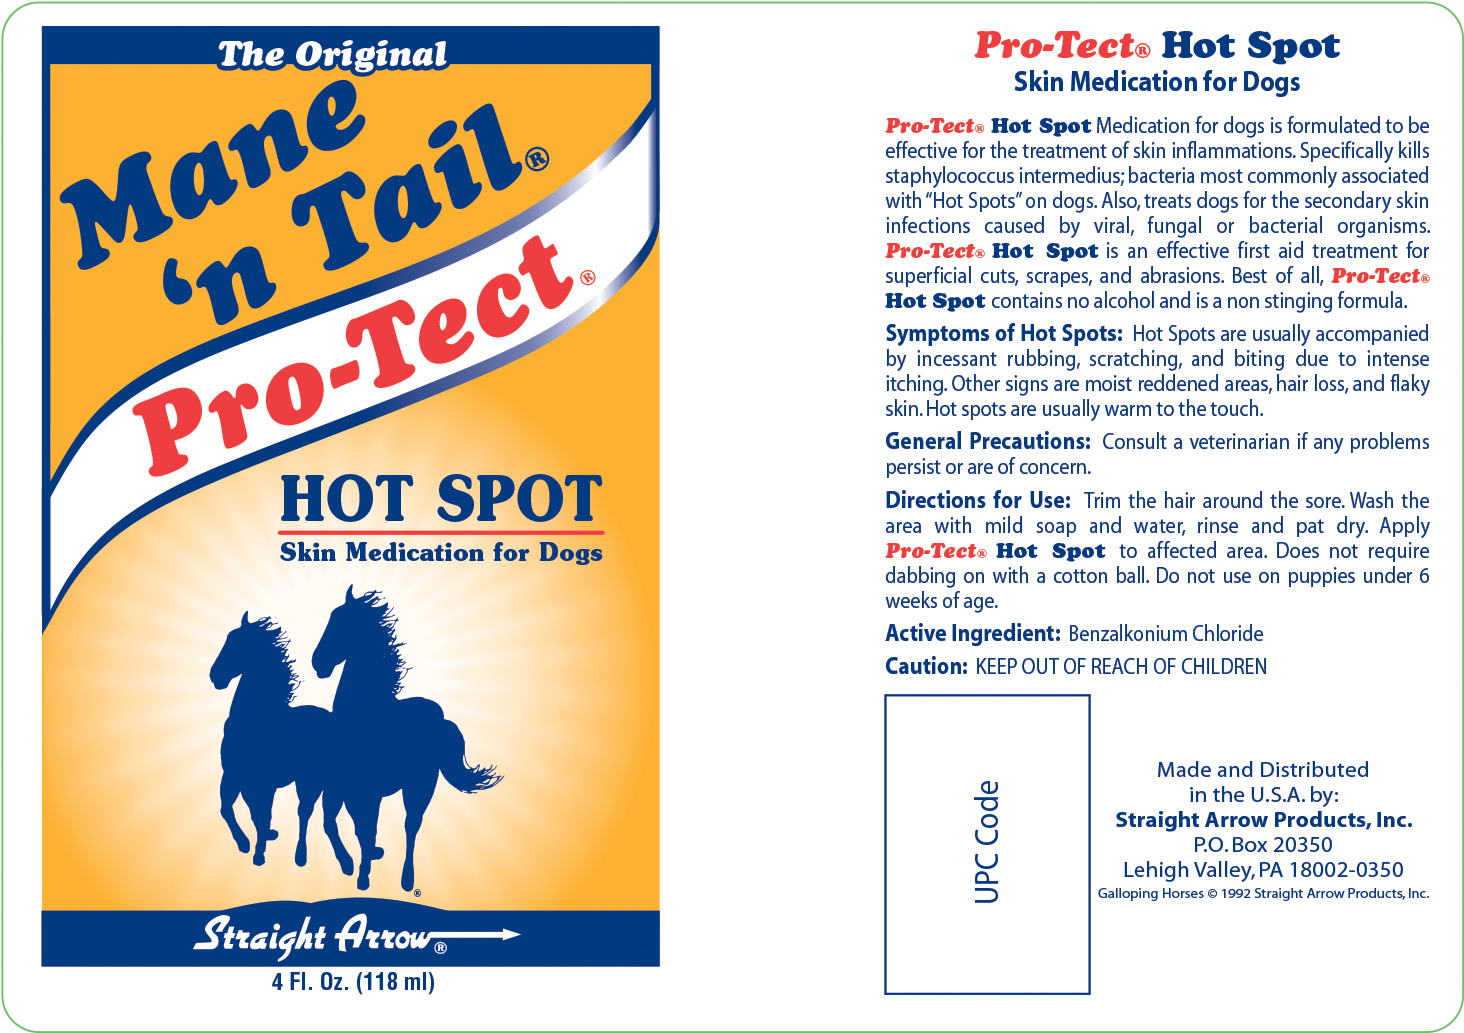 Pro-Tect AM Hot Spot Label